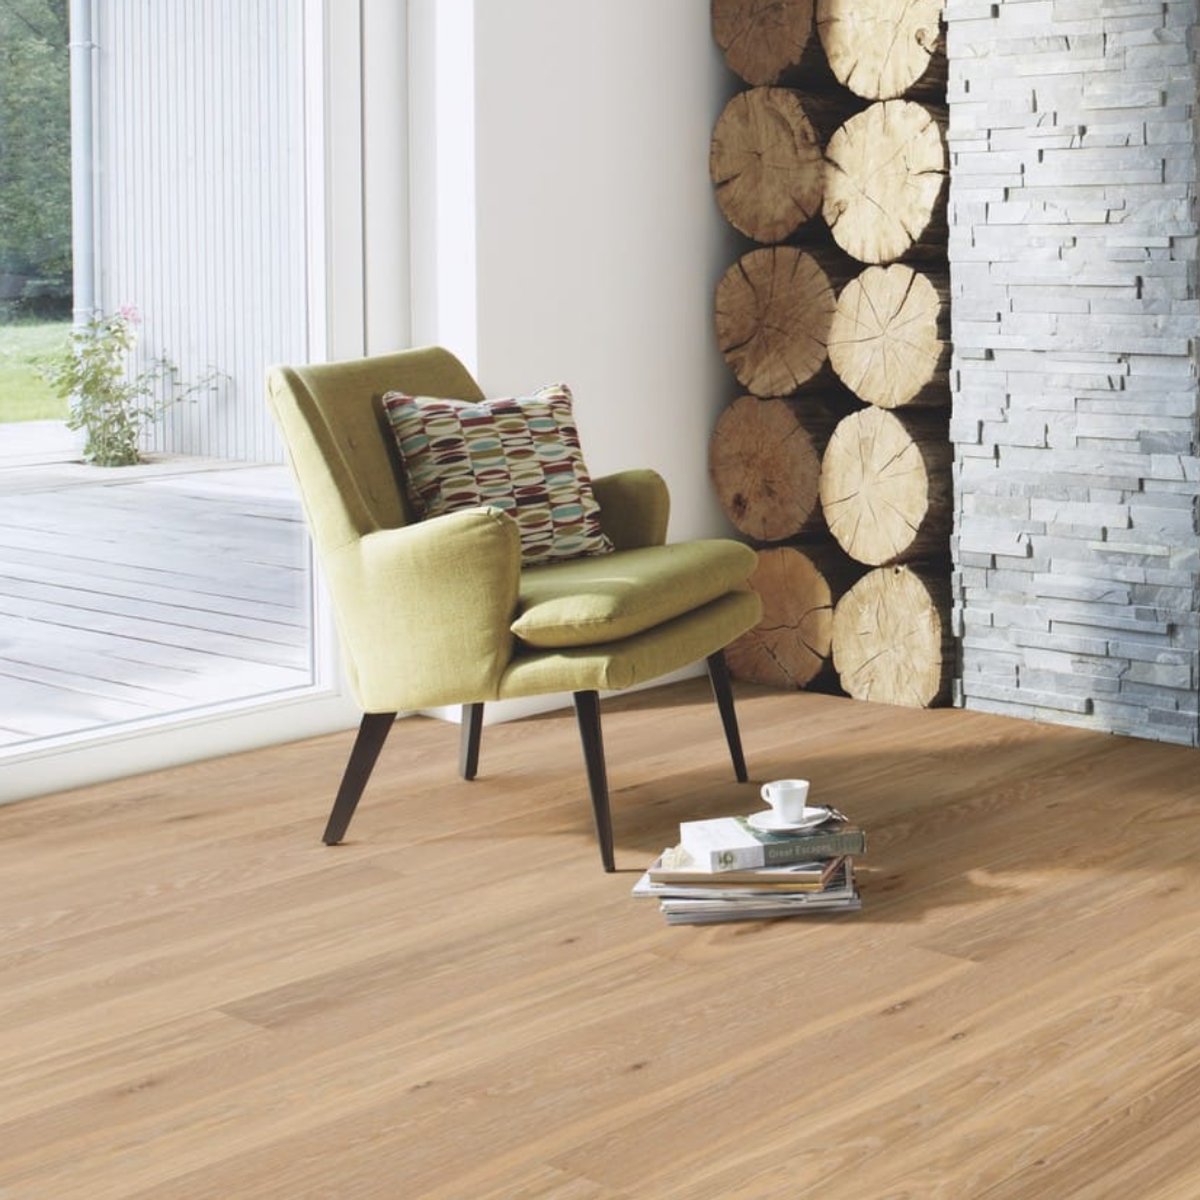 Dub Old Grey – drevená podlaha